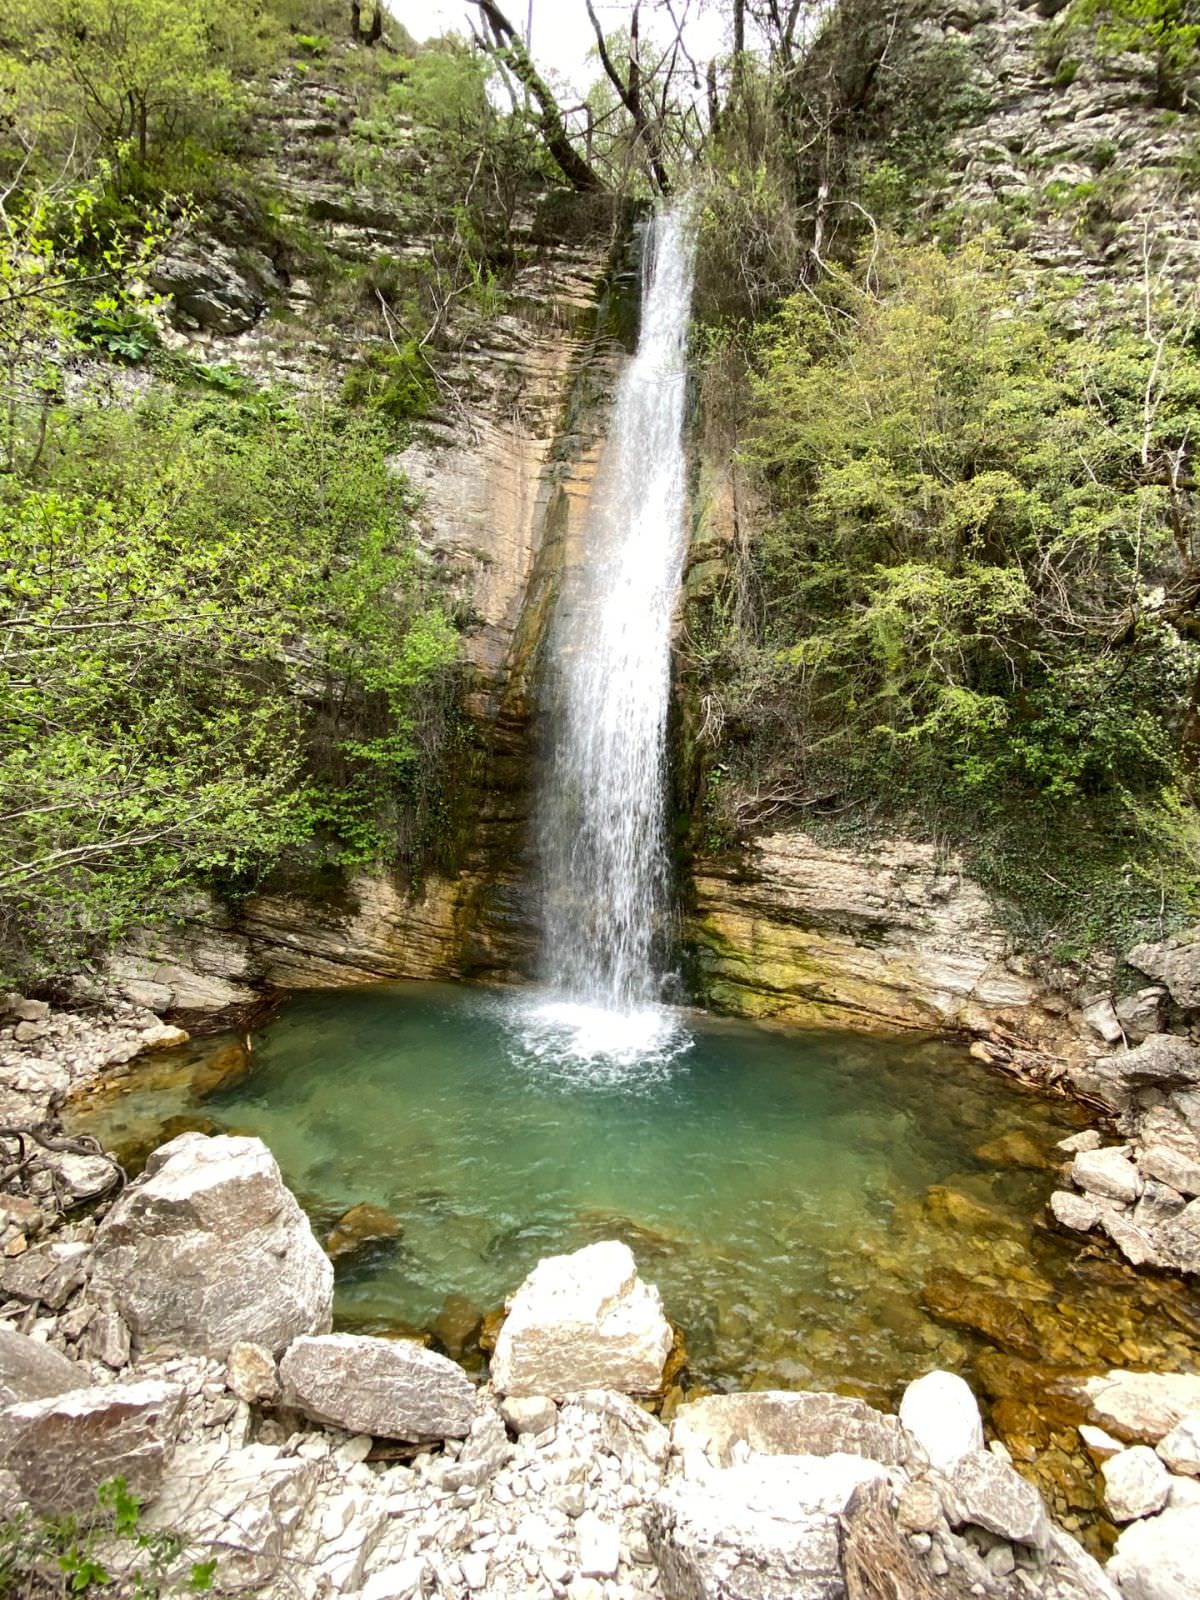 _Lakhepa waterfall near Tvishi